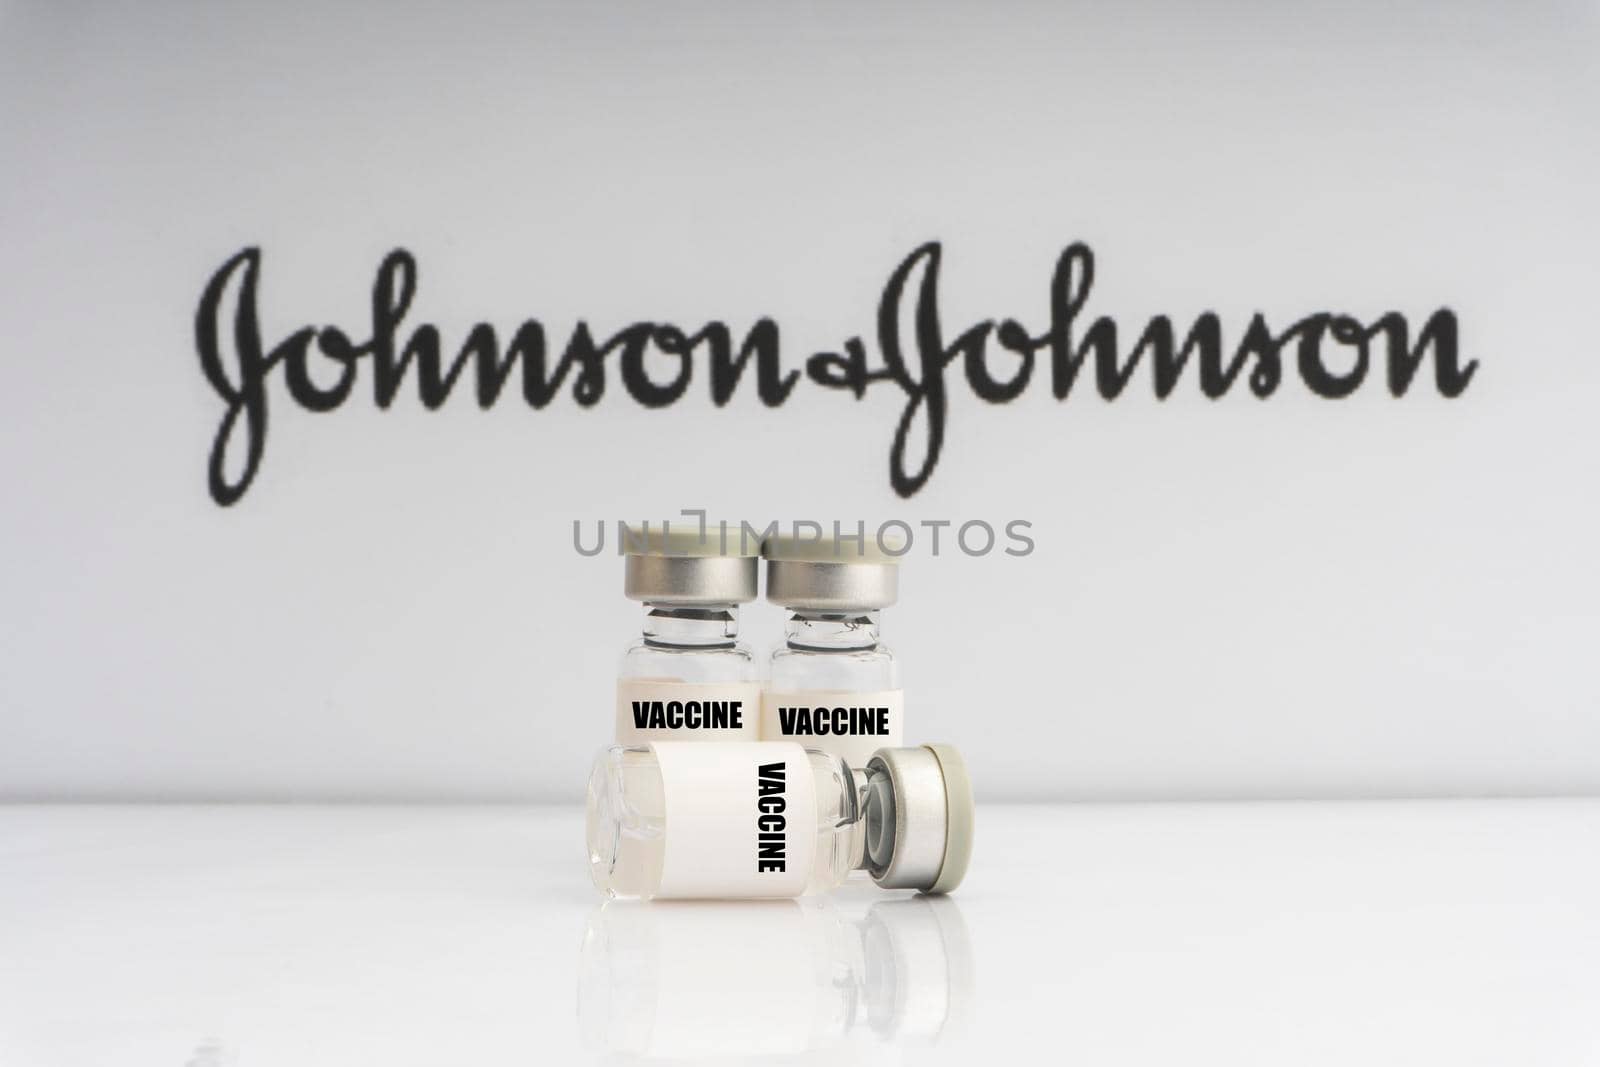 Kuala Lumpur, Malaysia - Mac 2, 2021: Vials vaccine on blurry Johnson & Johnson background. by silverwings